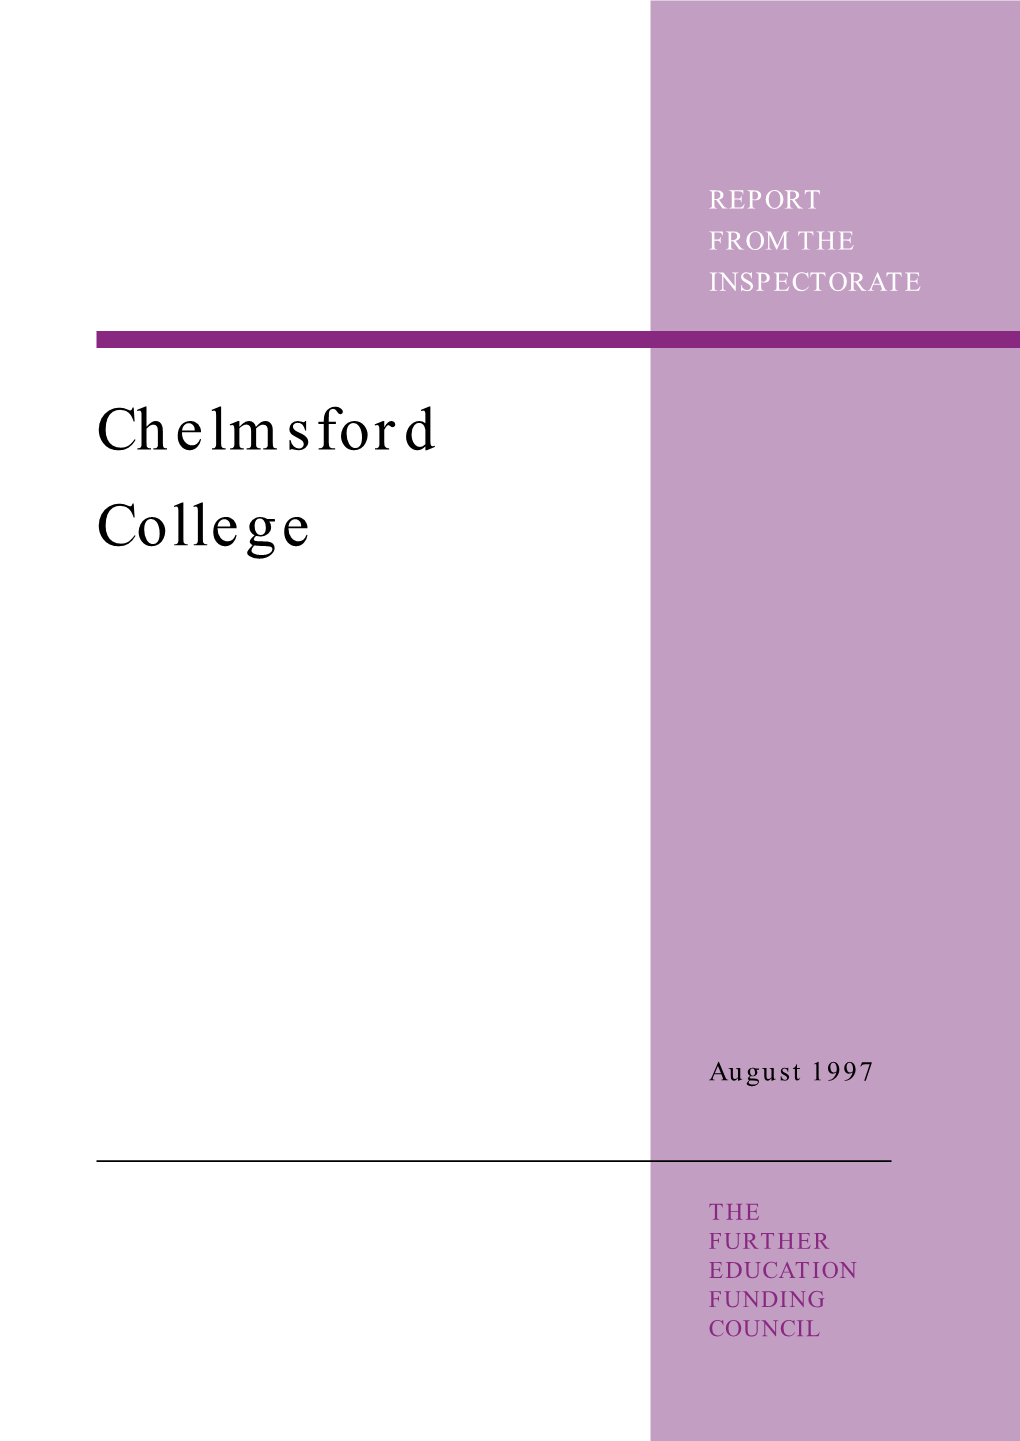 Chelmsford College